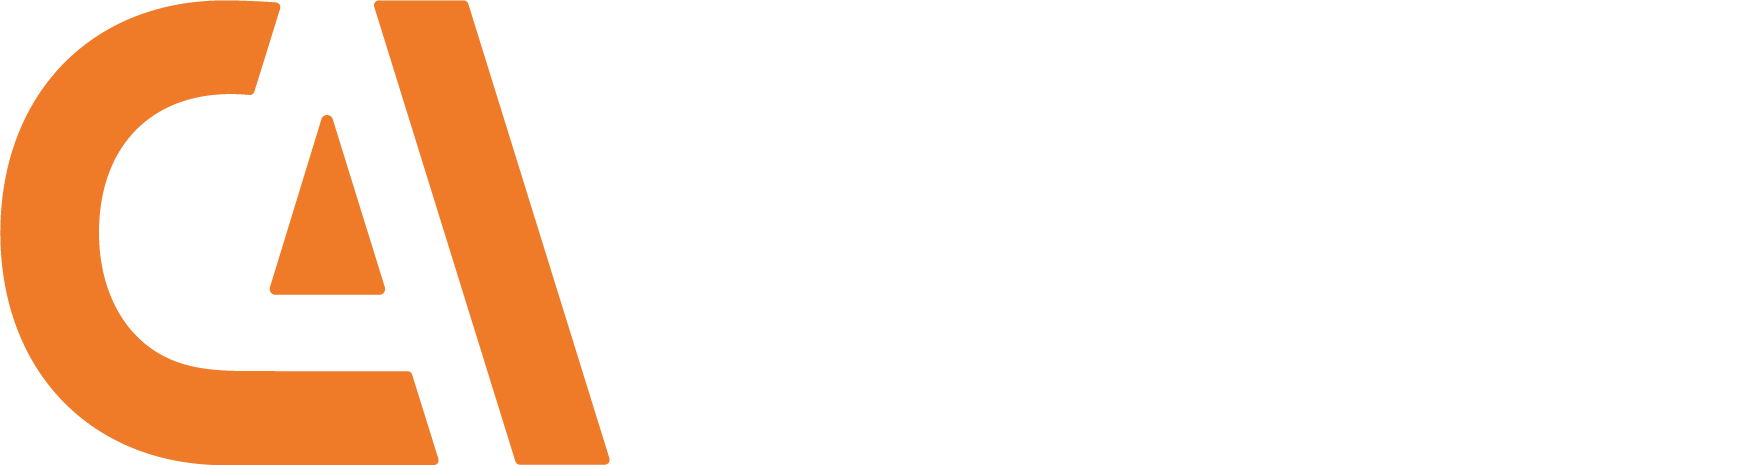 Codeless Academy logo